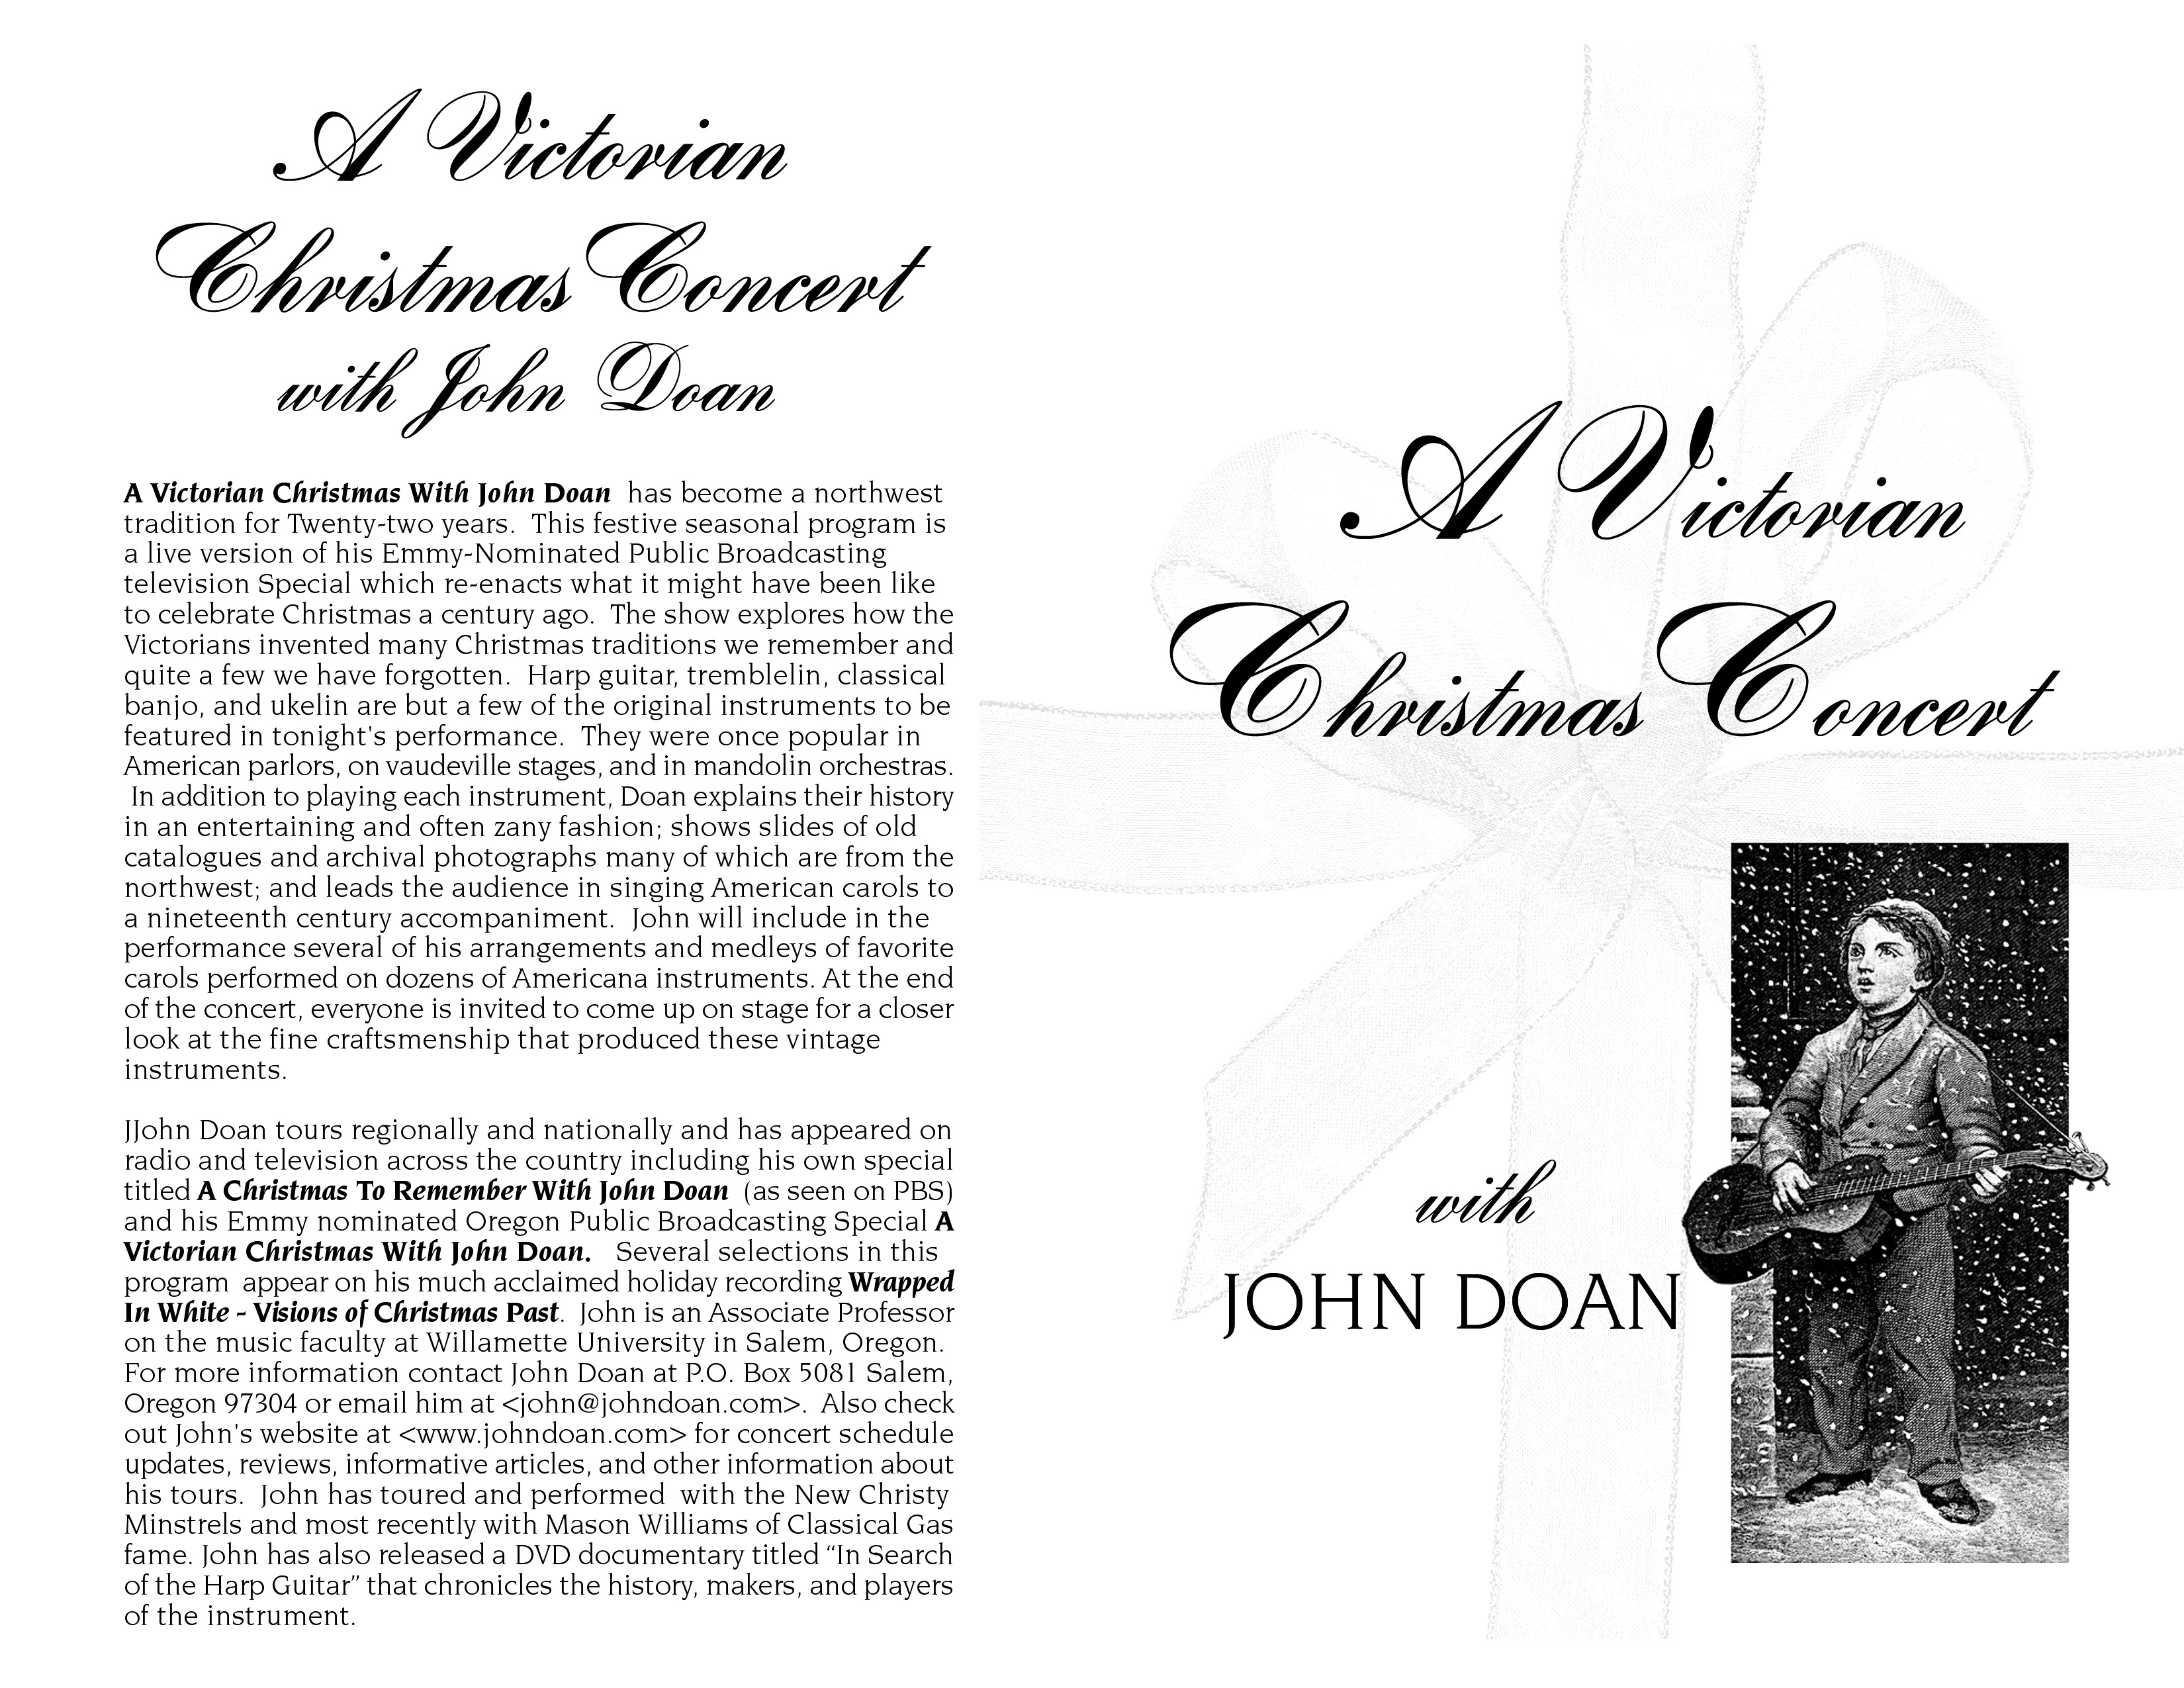 Victorian Christmas Concert Program Page 1